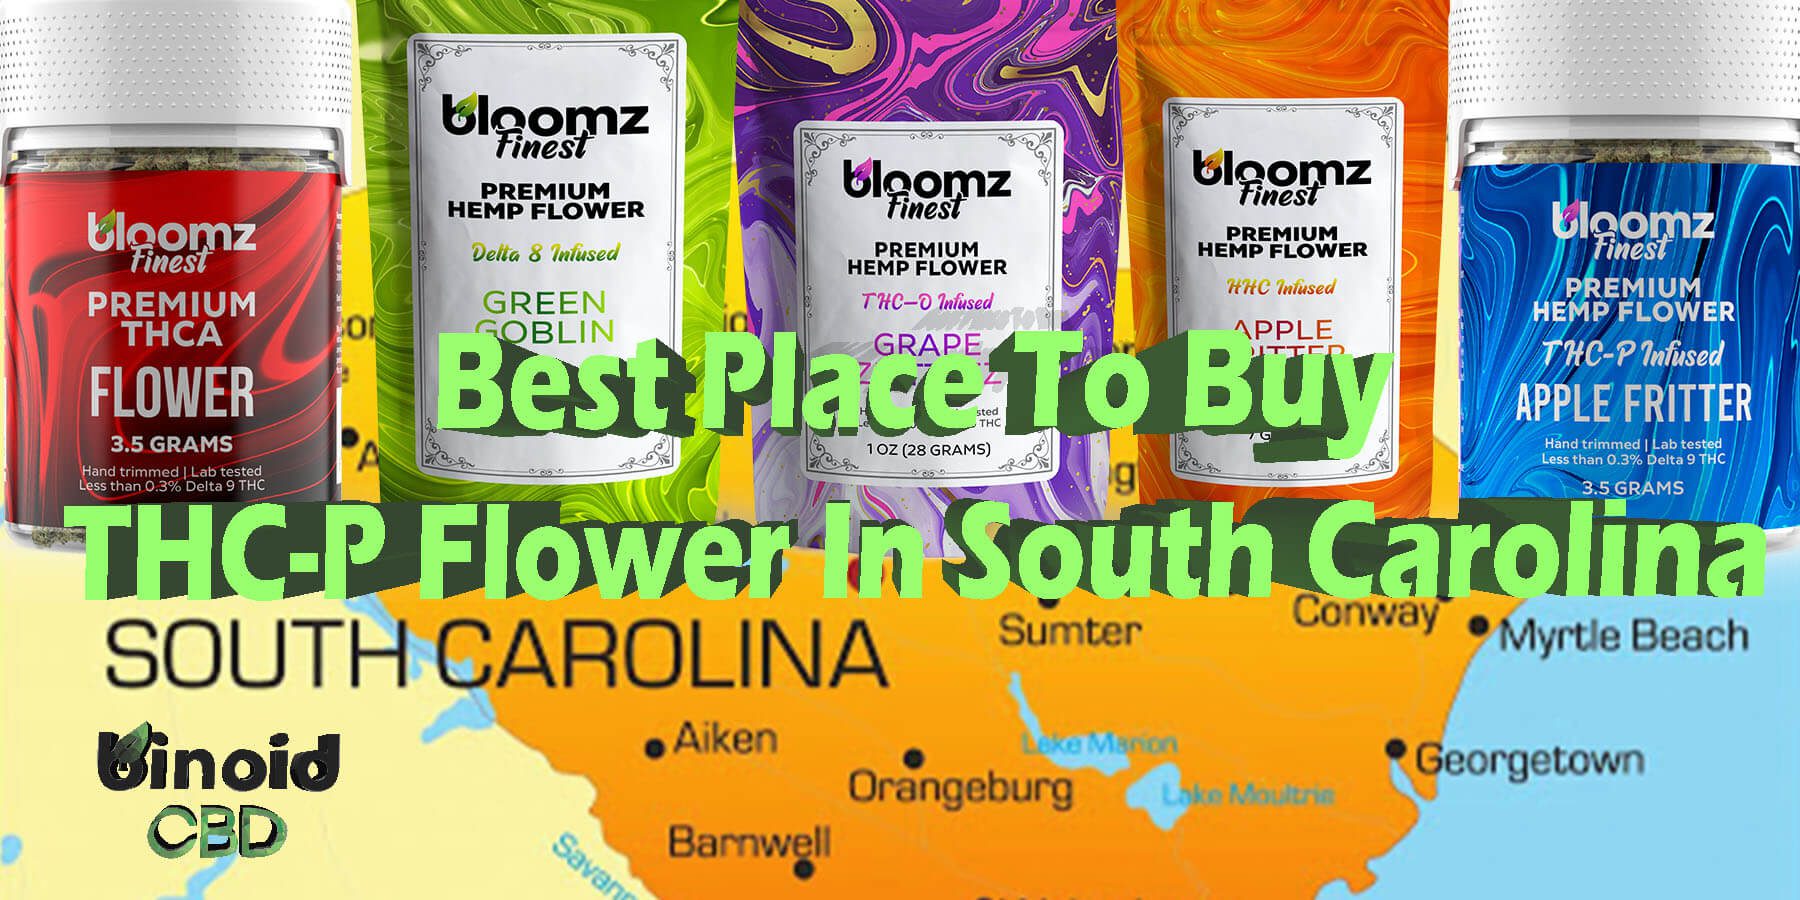 Buy THCP Flower South Carolina Get Online Near Me For Sale Best Brand Strongest Real Legal Store Shop Reddit